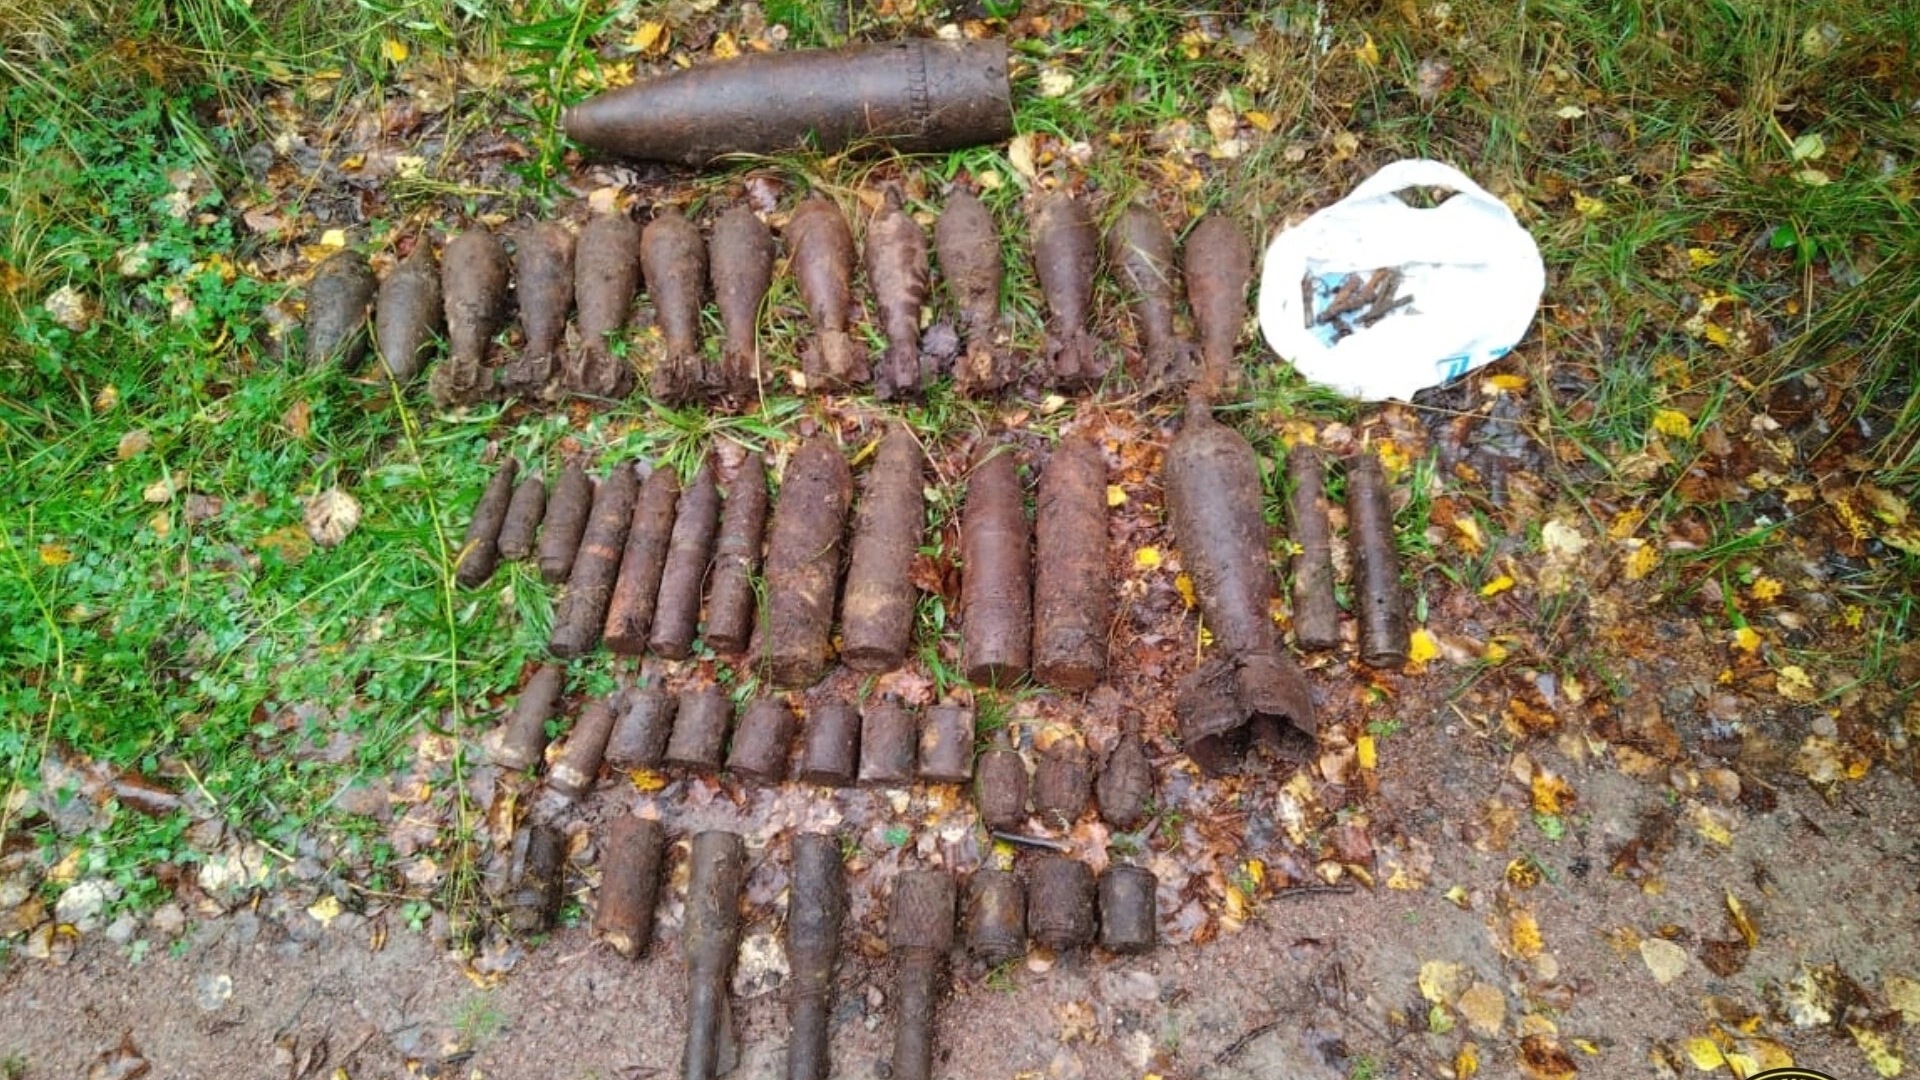 Склад боеприпасов с авиабомбами взорвали в районе Карелии